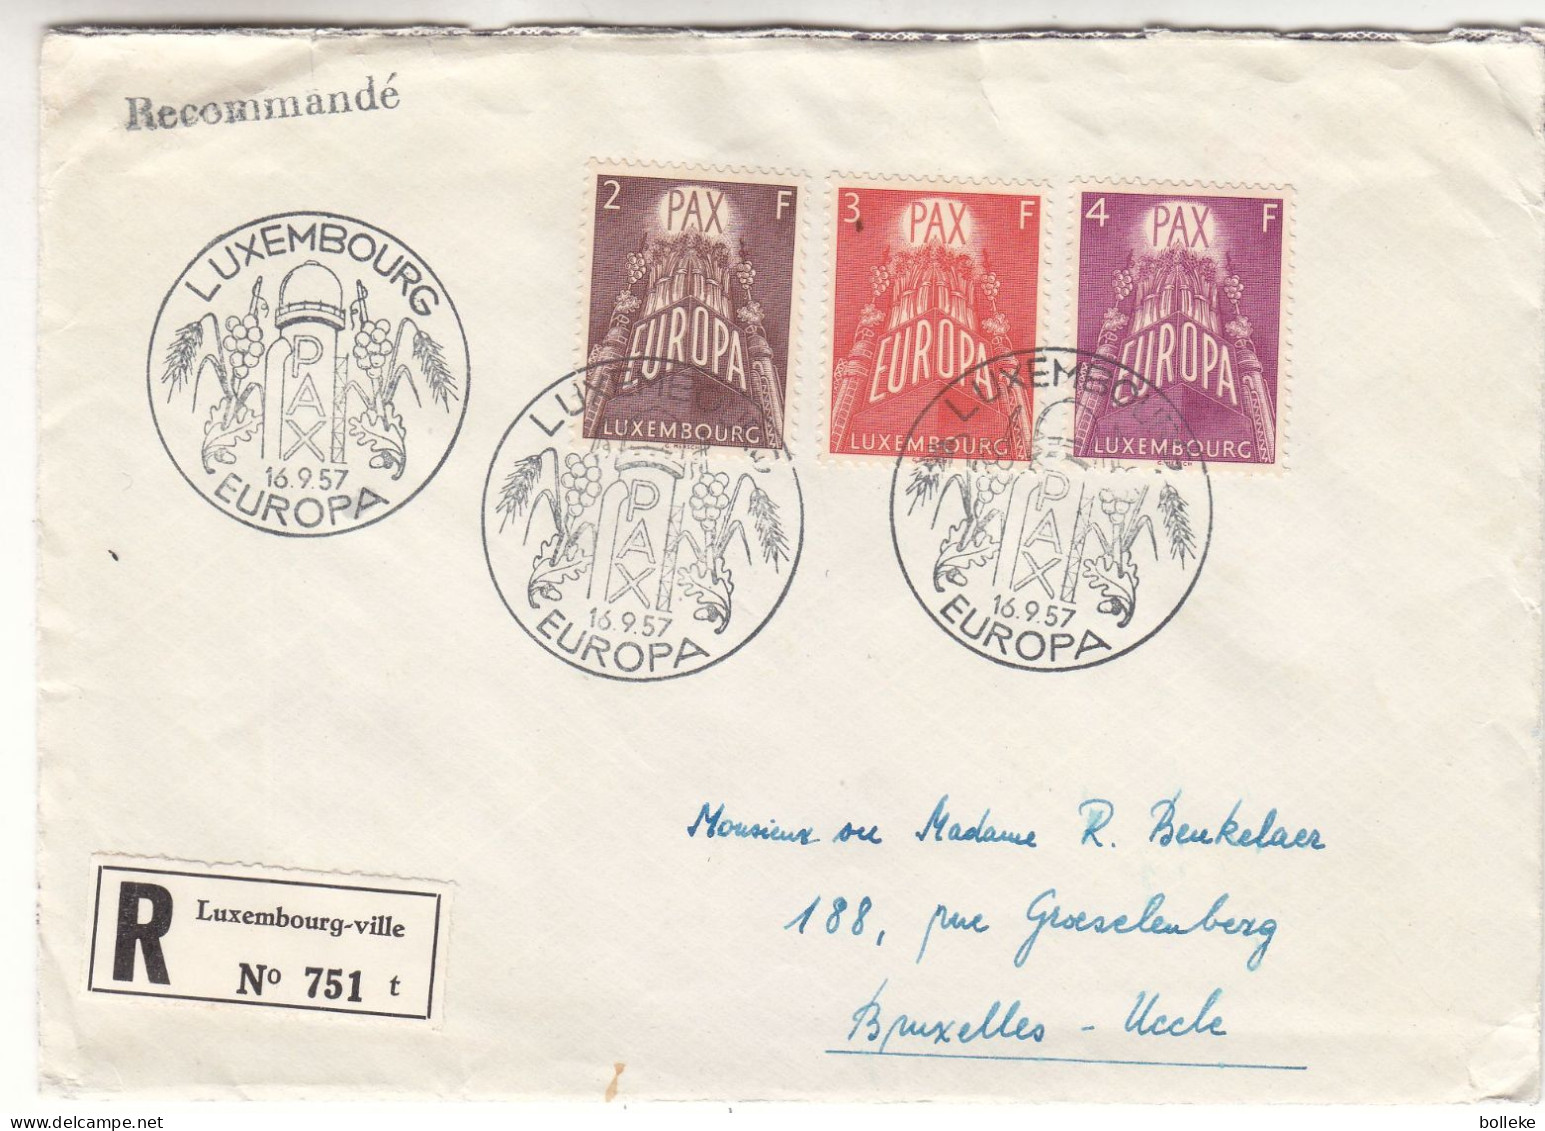 Luxembourg - Lettre FDC Recom De 1957 - Oblit Luxembourg - Europa 57 -  Valeur 75 Euros - Lettres & Documents